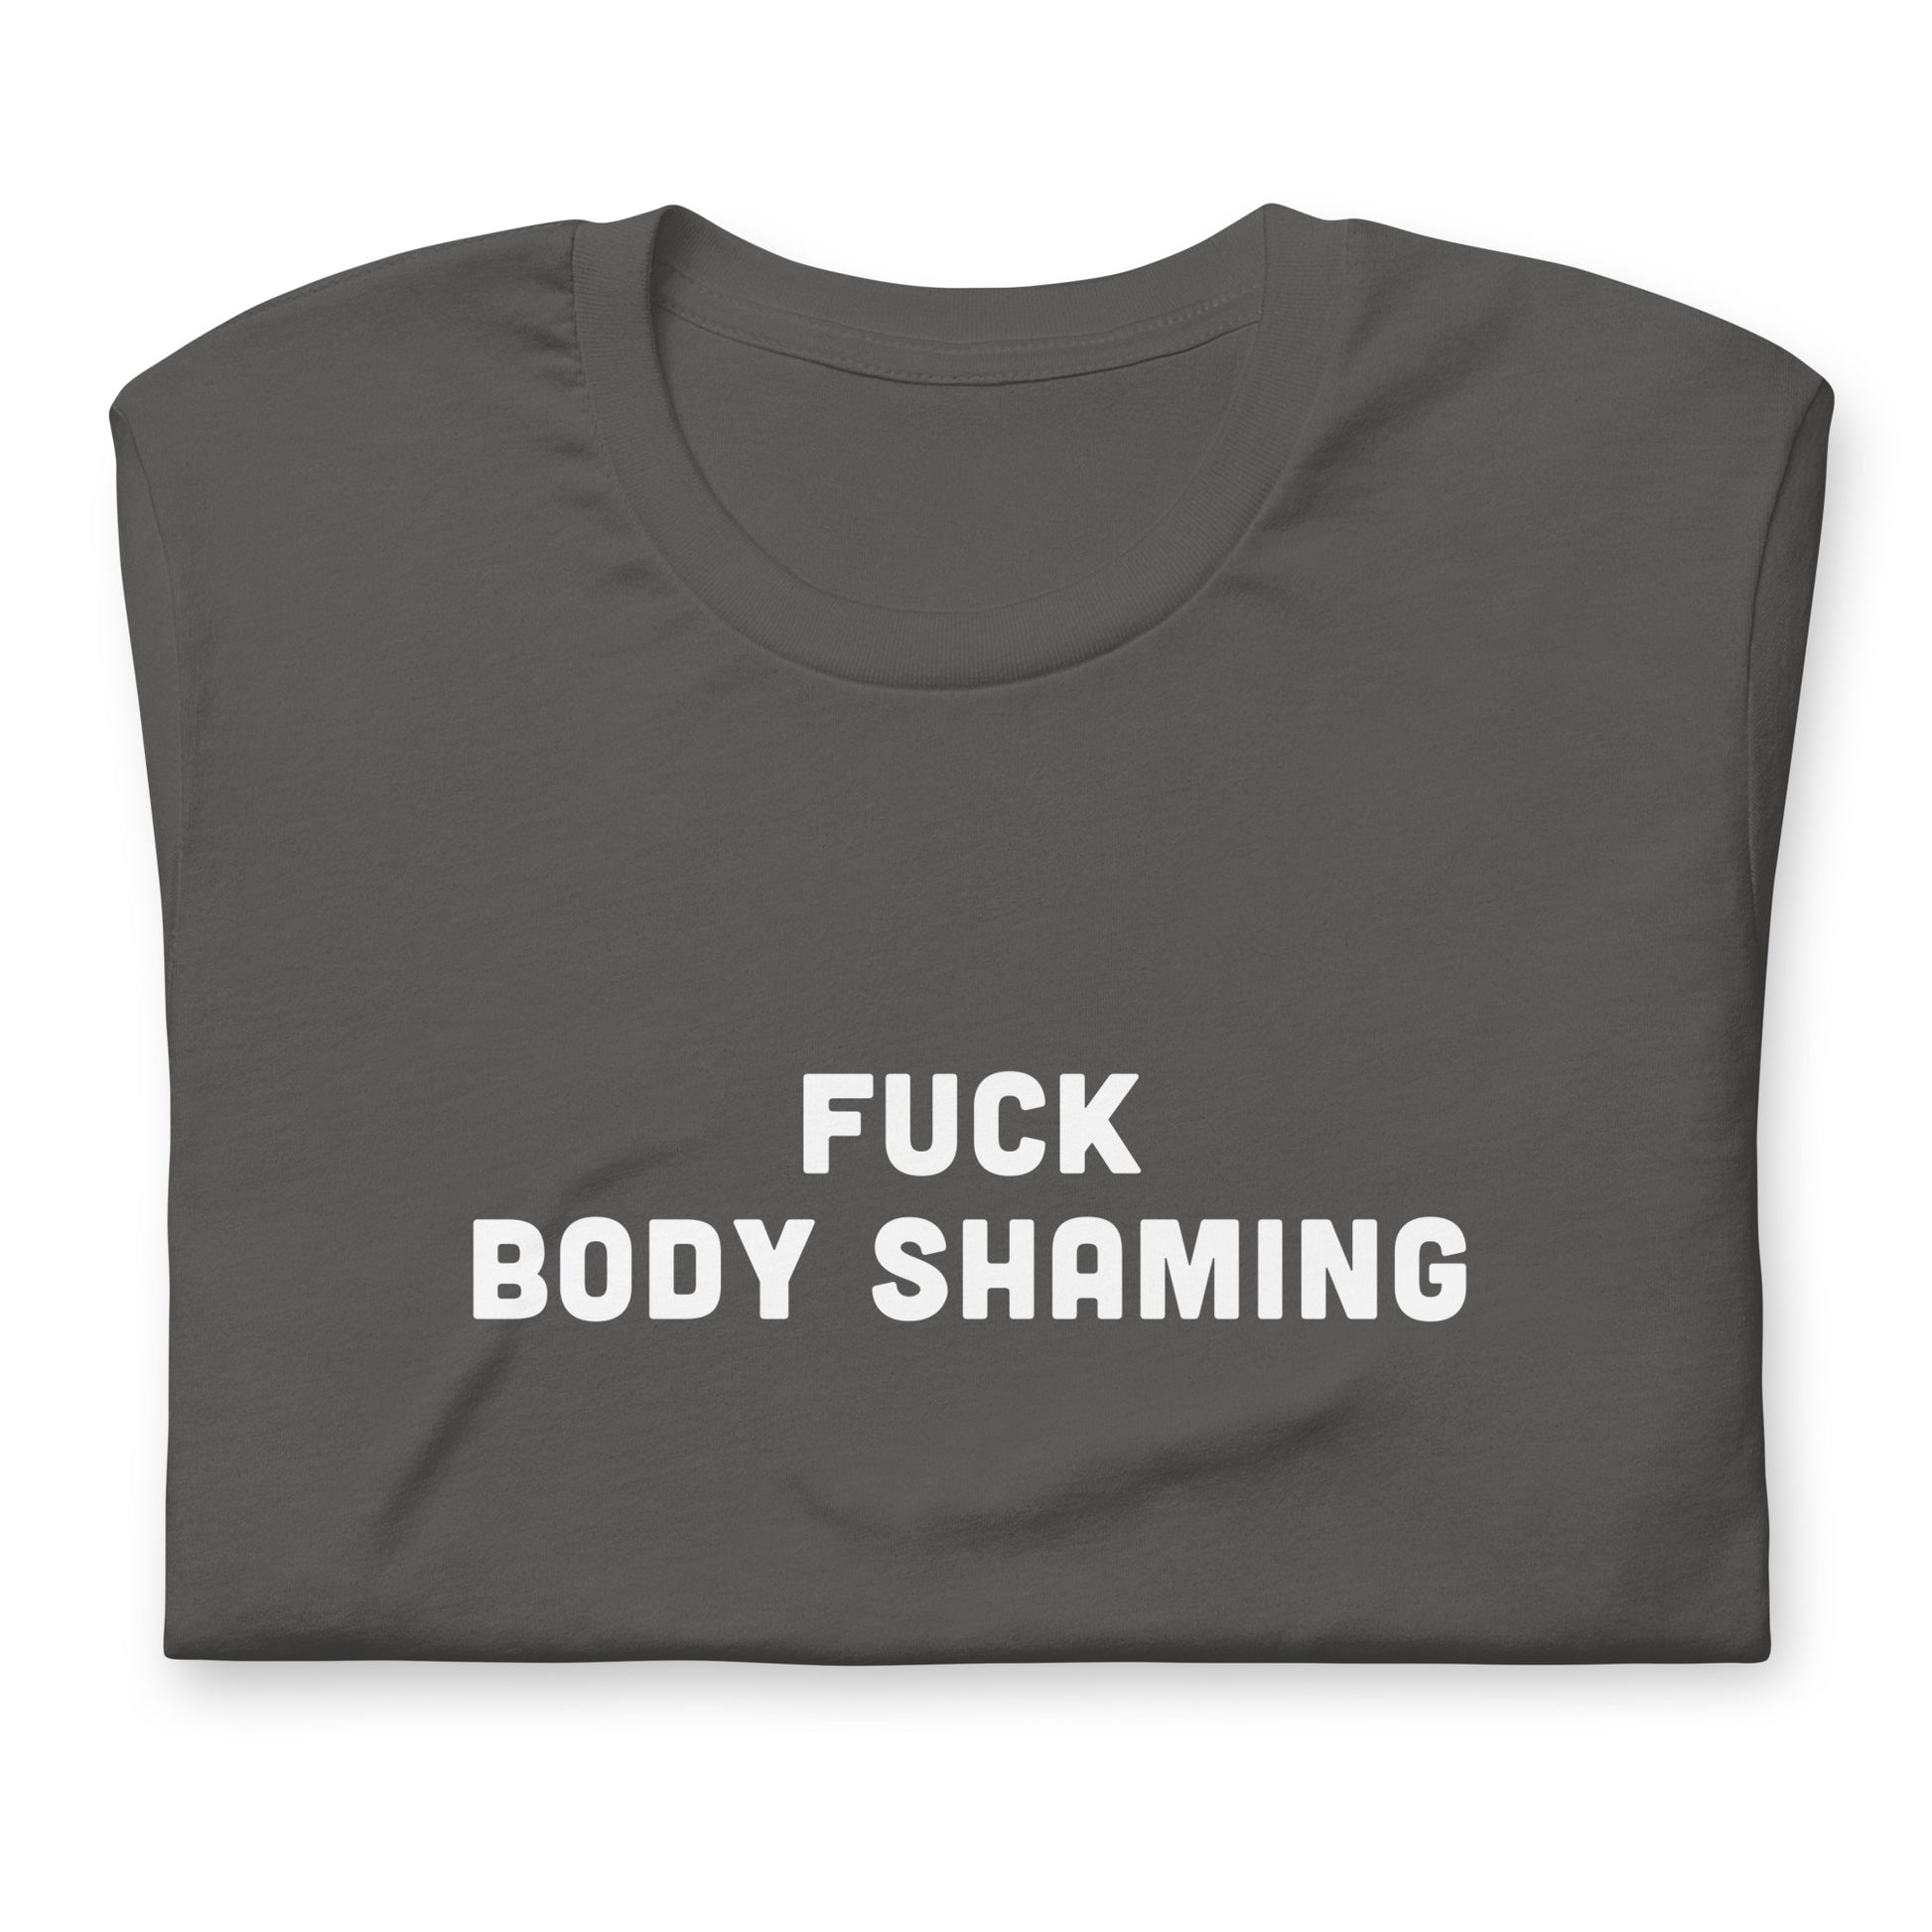 Fuck Body Shaming T-shirt Size 2XL Color Black